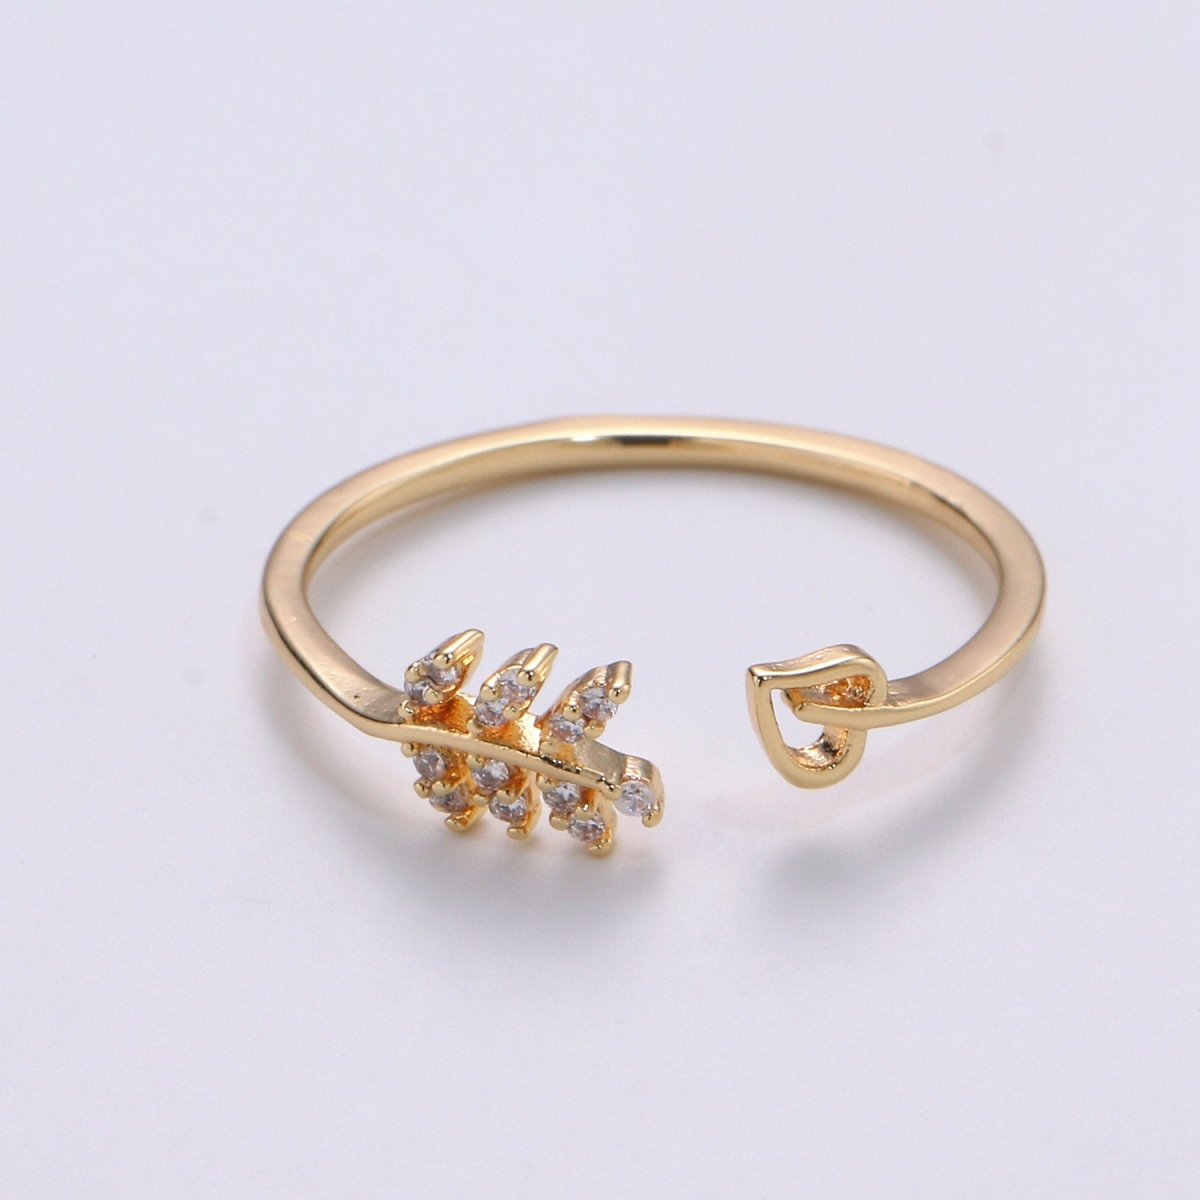 Gold Olive Ring, Minimalist Ring, Tree Branch Open Ring, Stackable Ring Thin Gold Ring Olive Branch Ring adjustable ring R-074 - DLUXCA